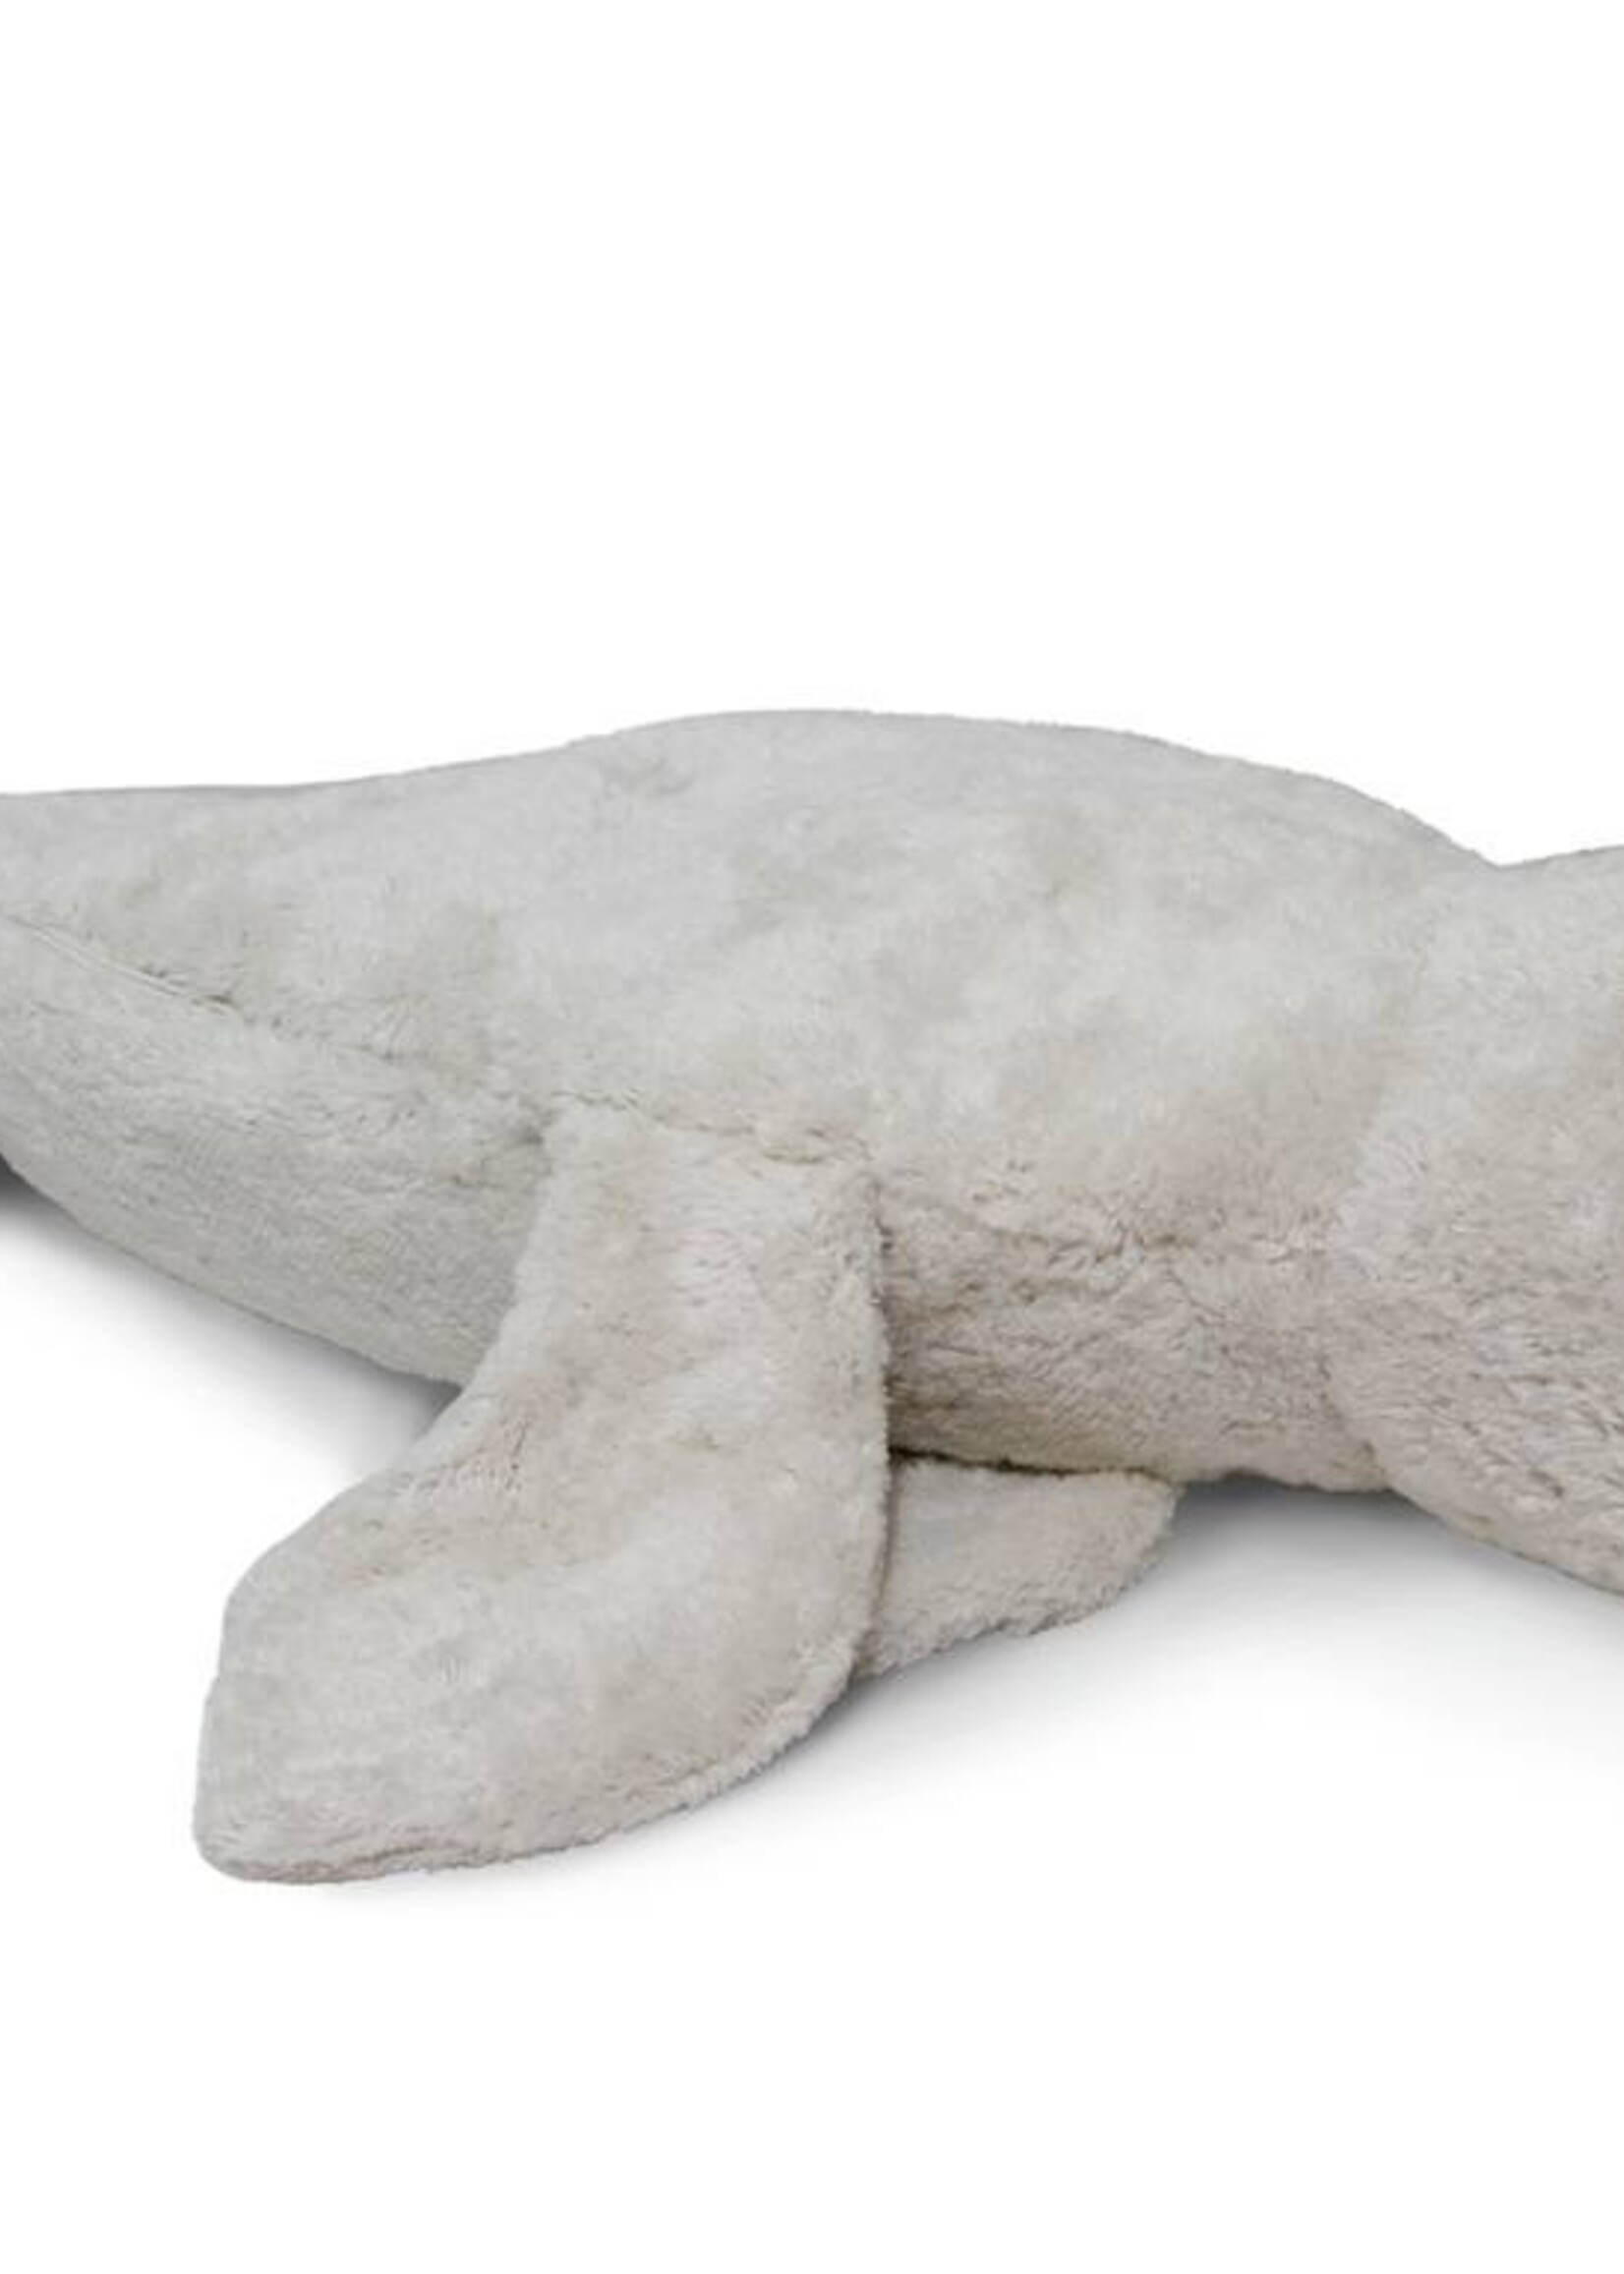 Senger naturwelt Cuddle animal seal Large White - Senger Naturwelt